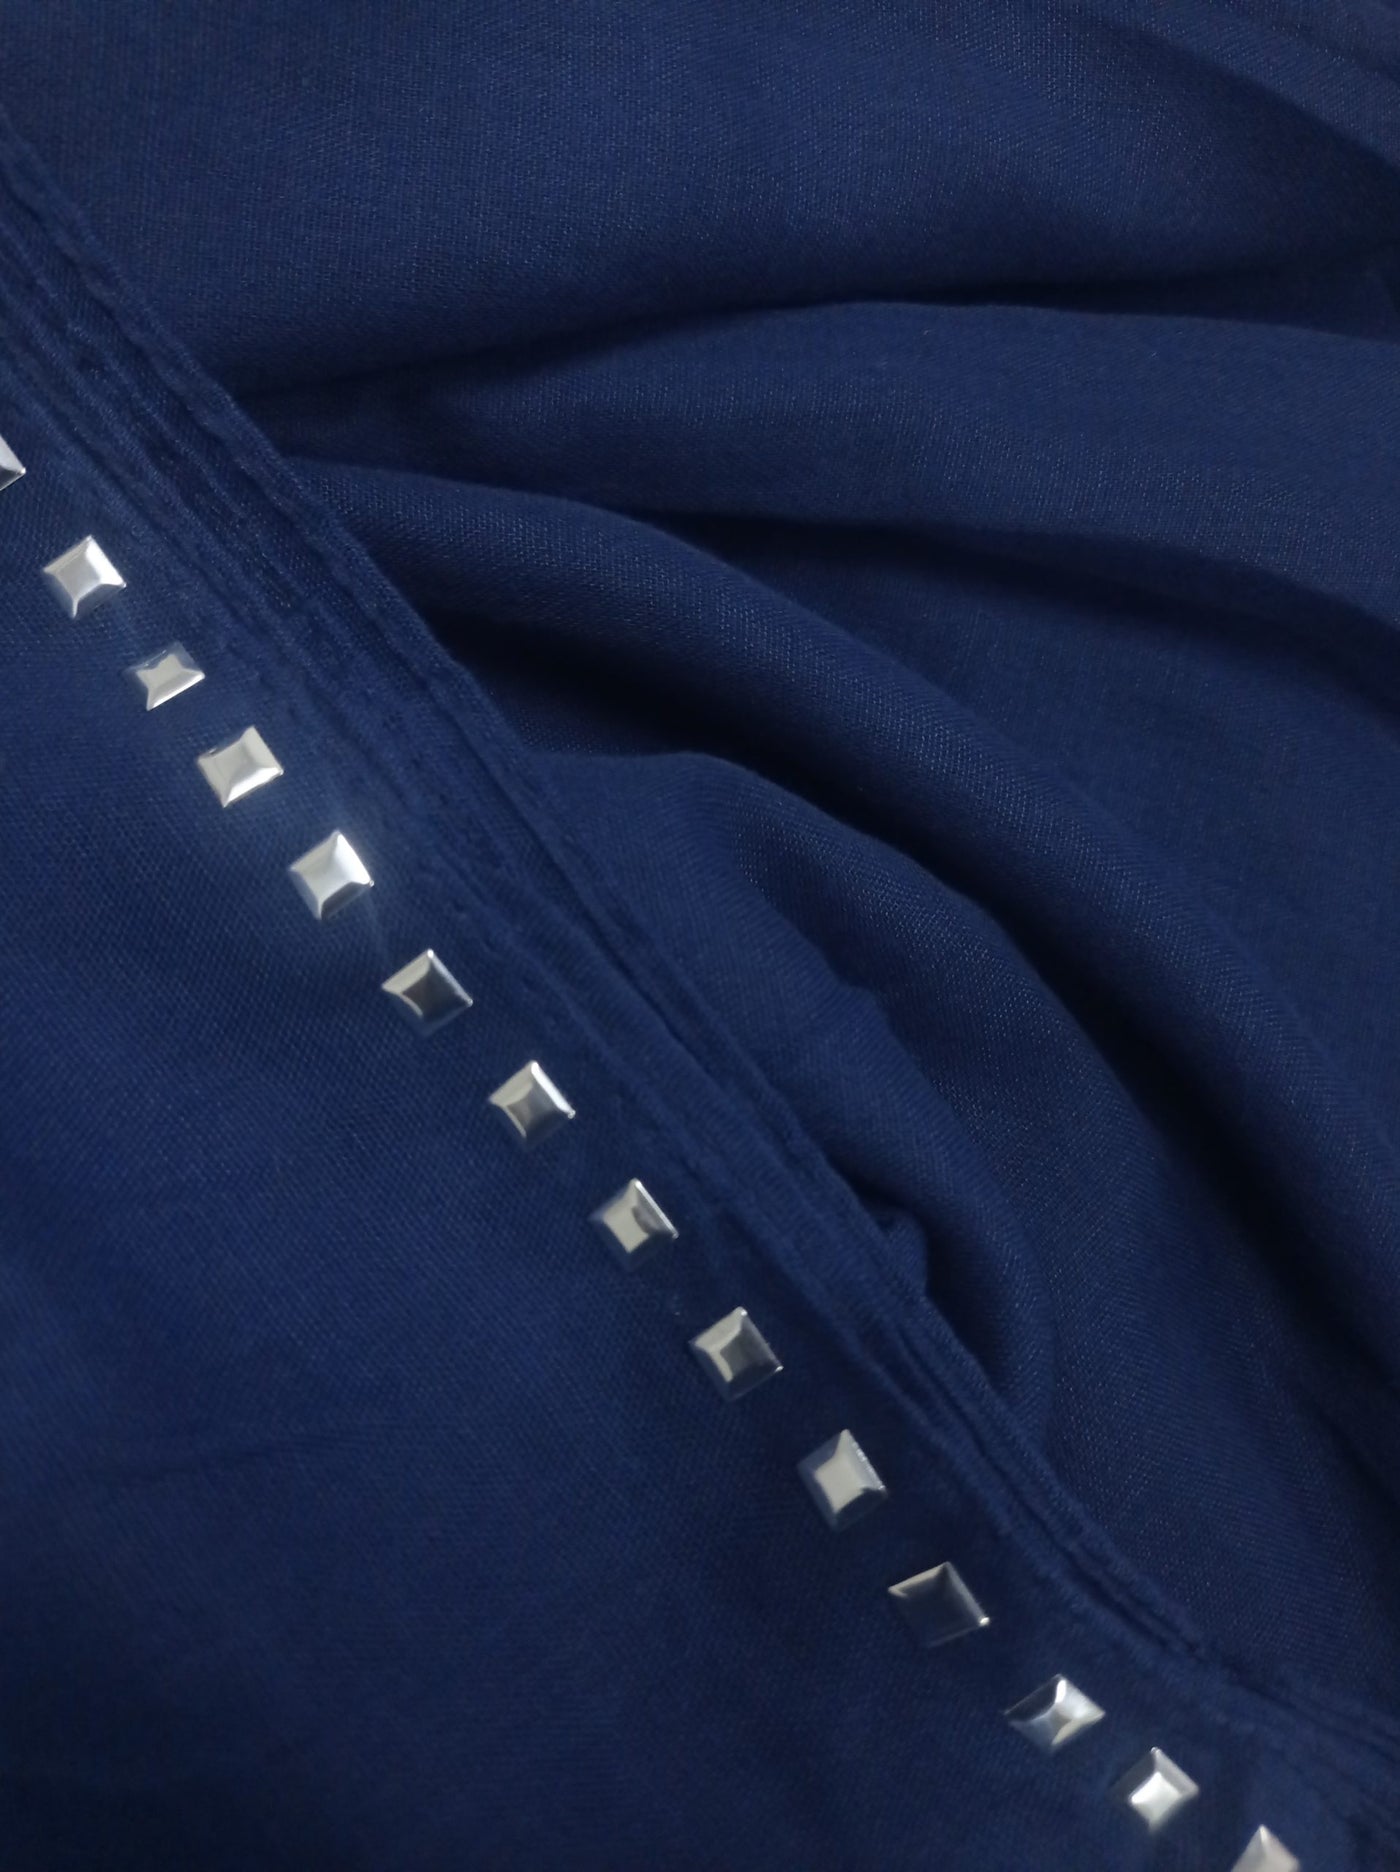 Studded Hijab - Navy Blue - Scarfs.pk #1 Online Hijab Store